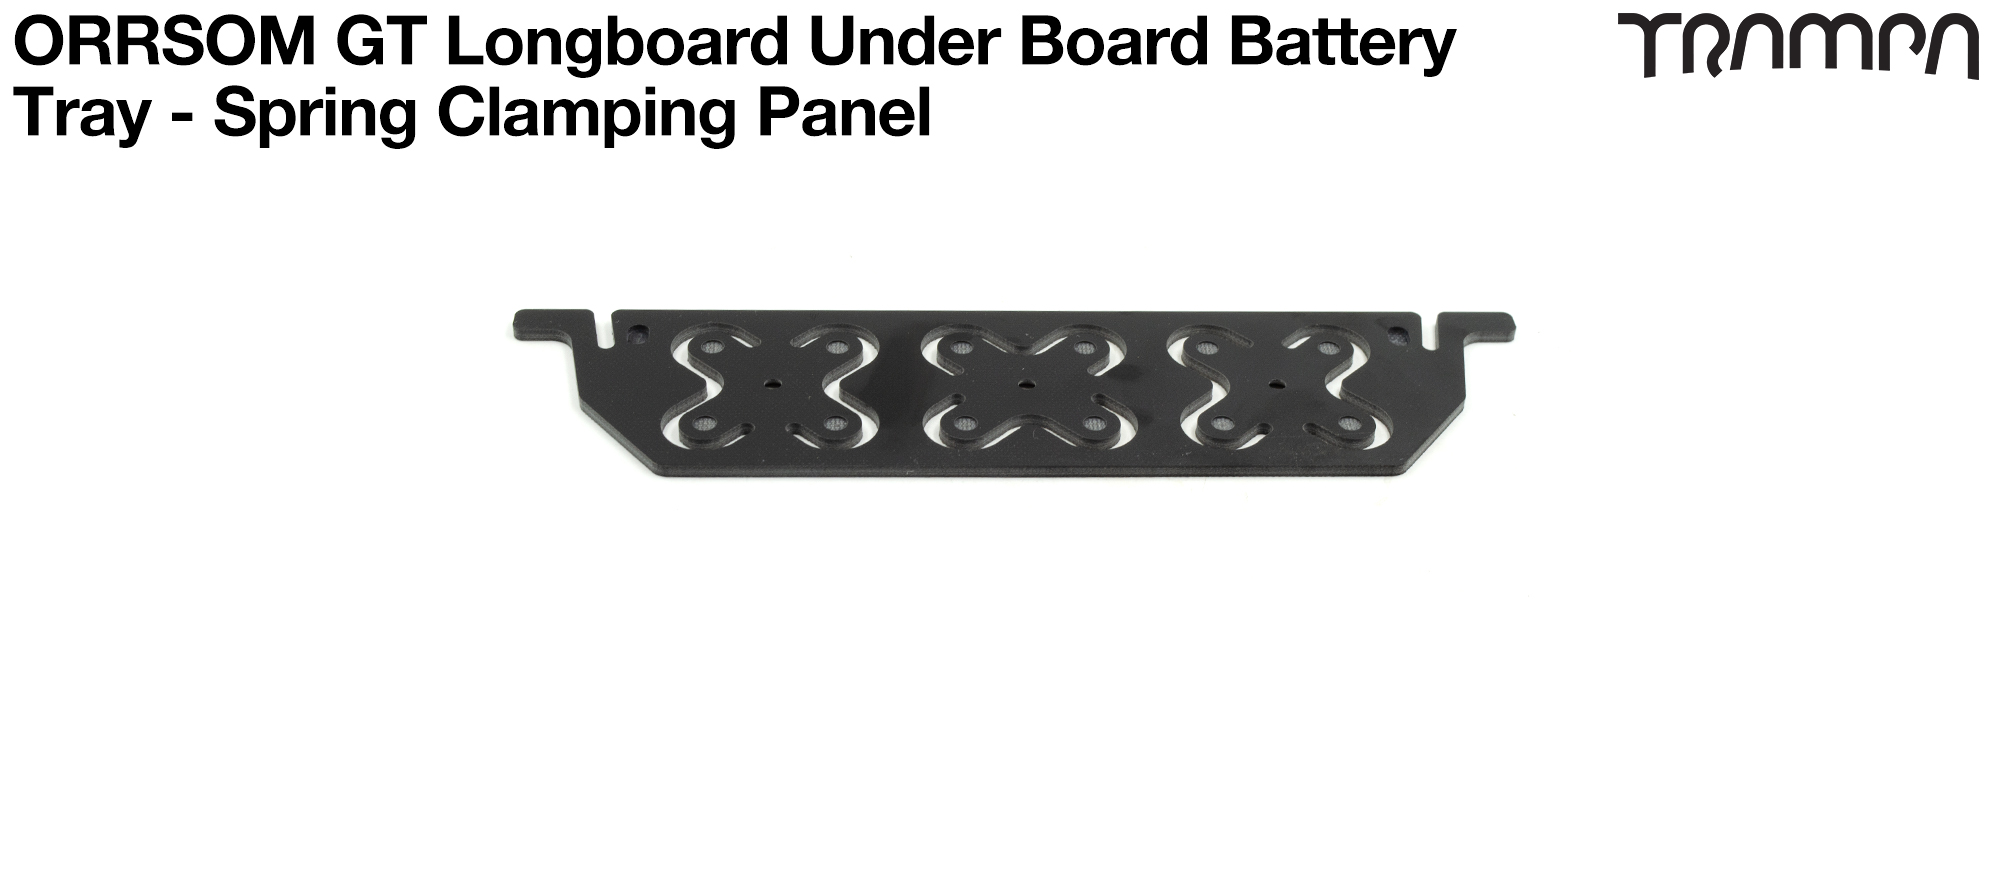 ORRSOM GT Longboard Under board Battery Tray - SPRING CLAMPING Panel